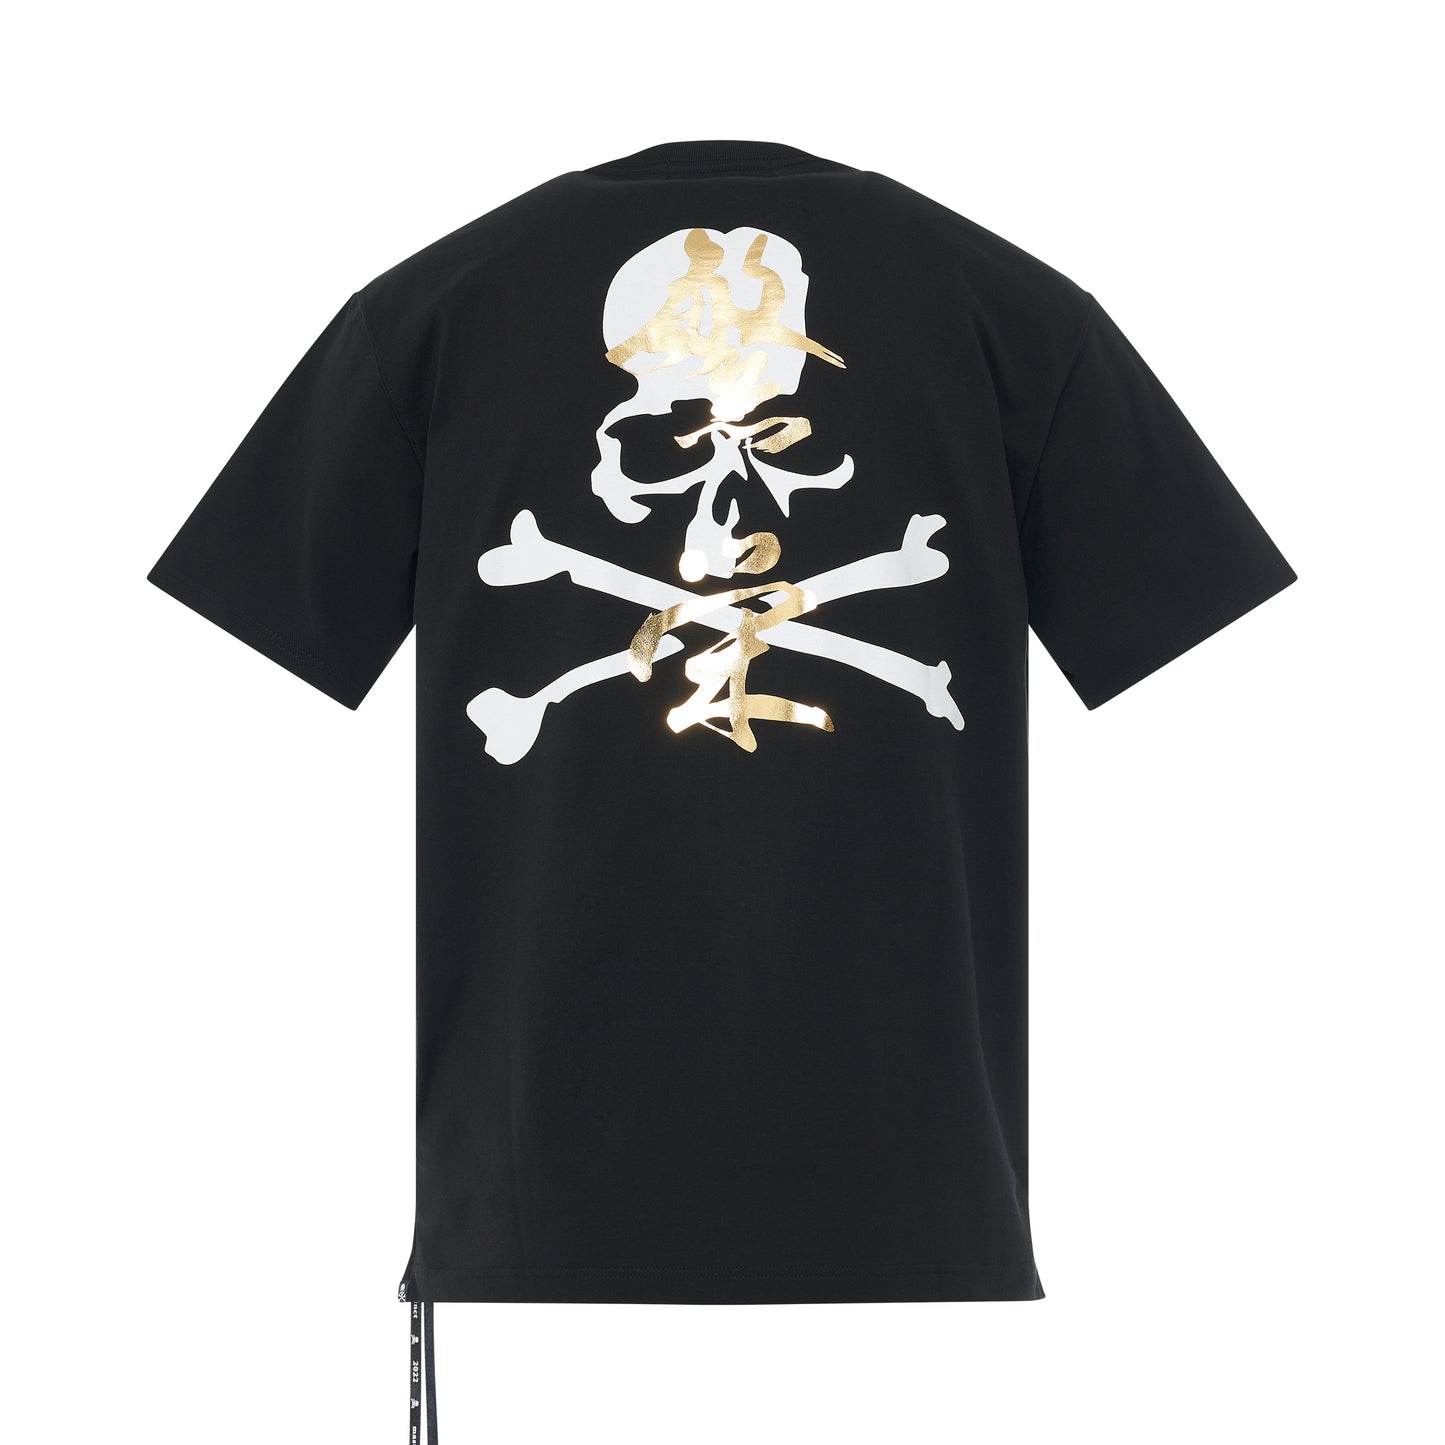 Prosperity Skull T-Shirt in Black